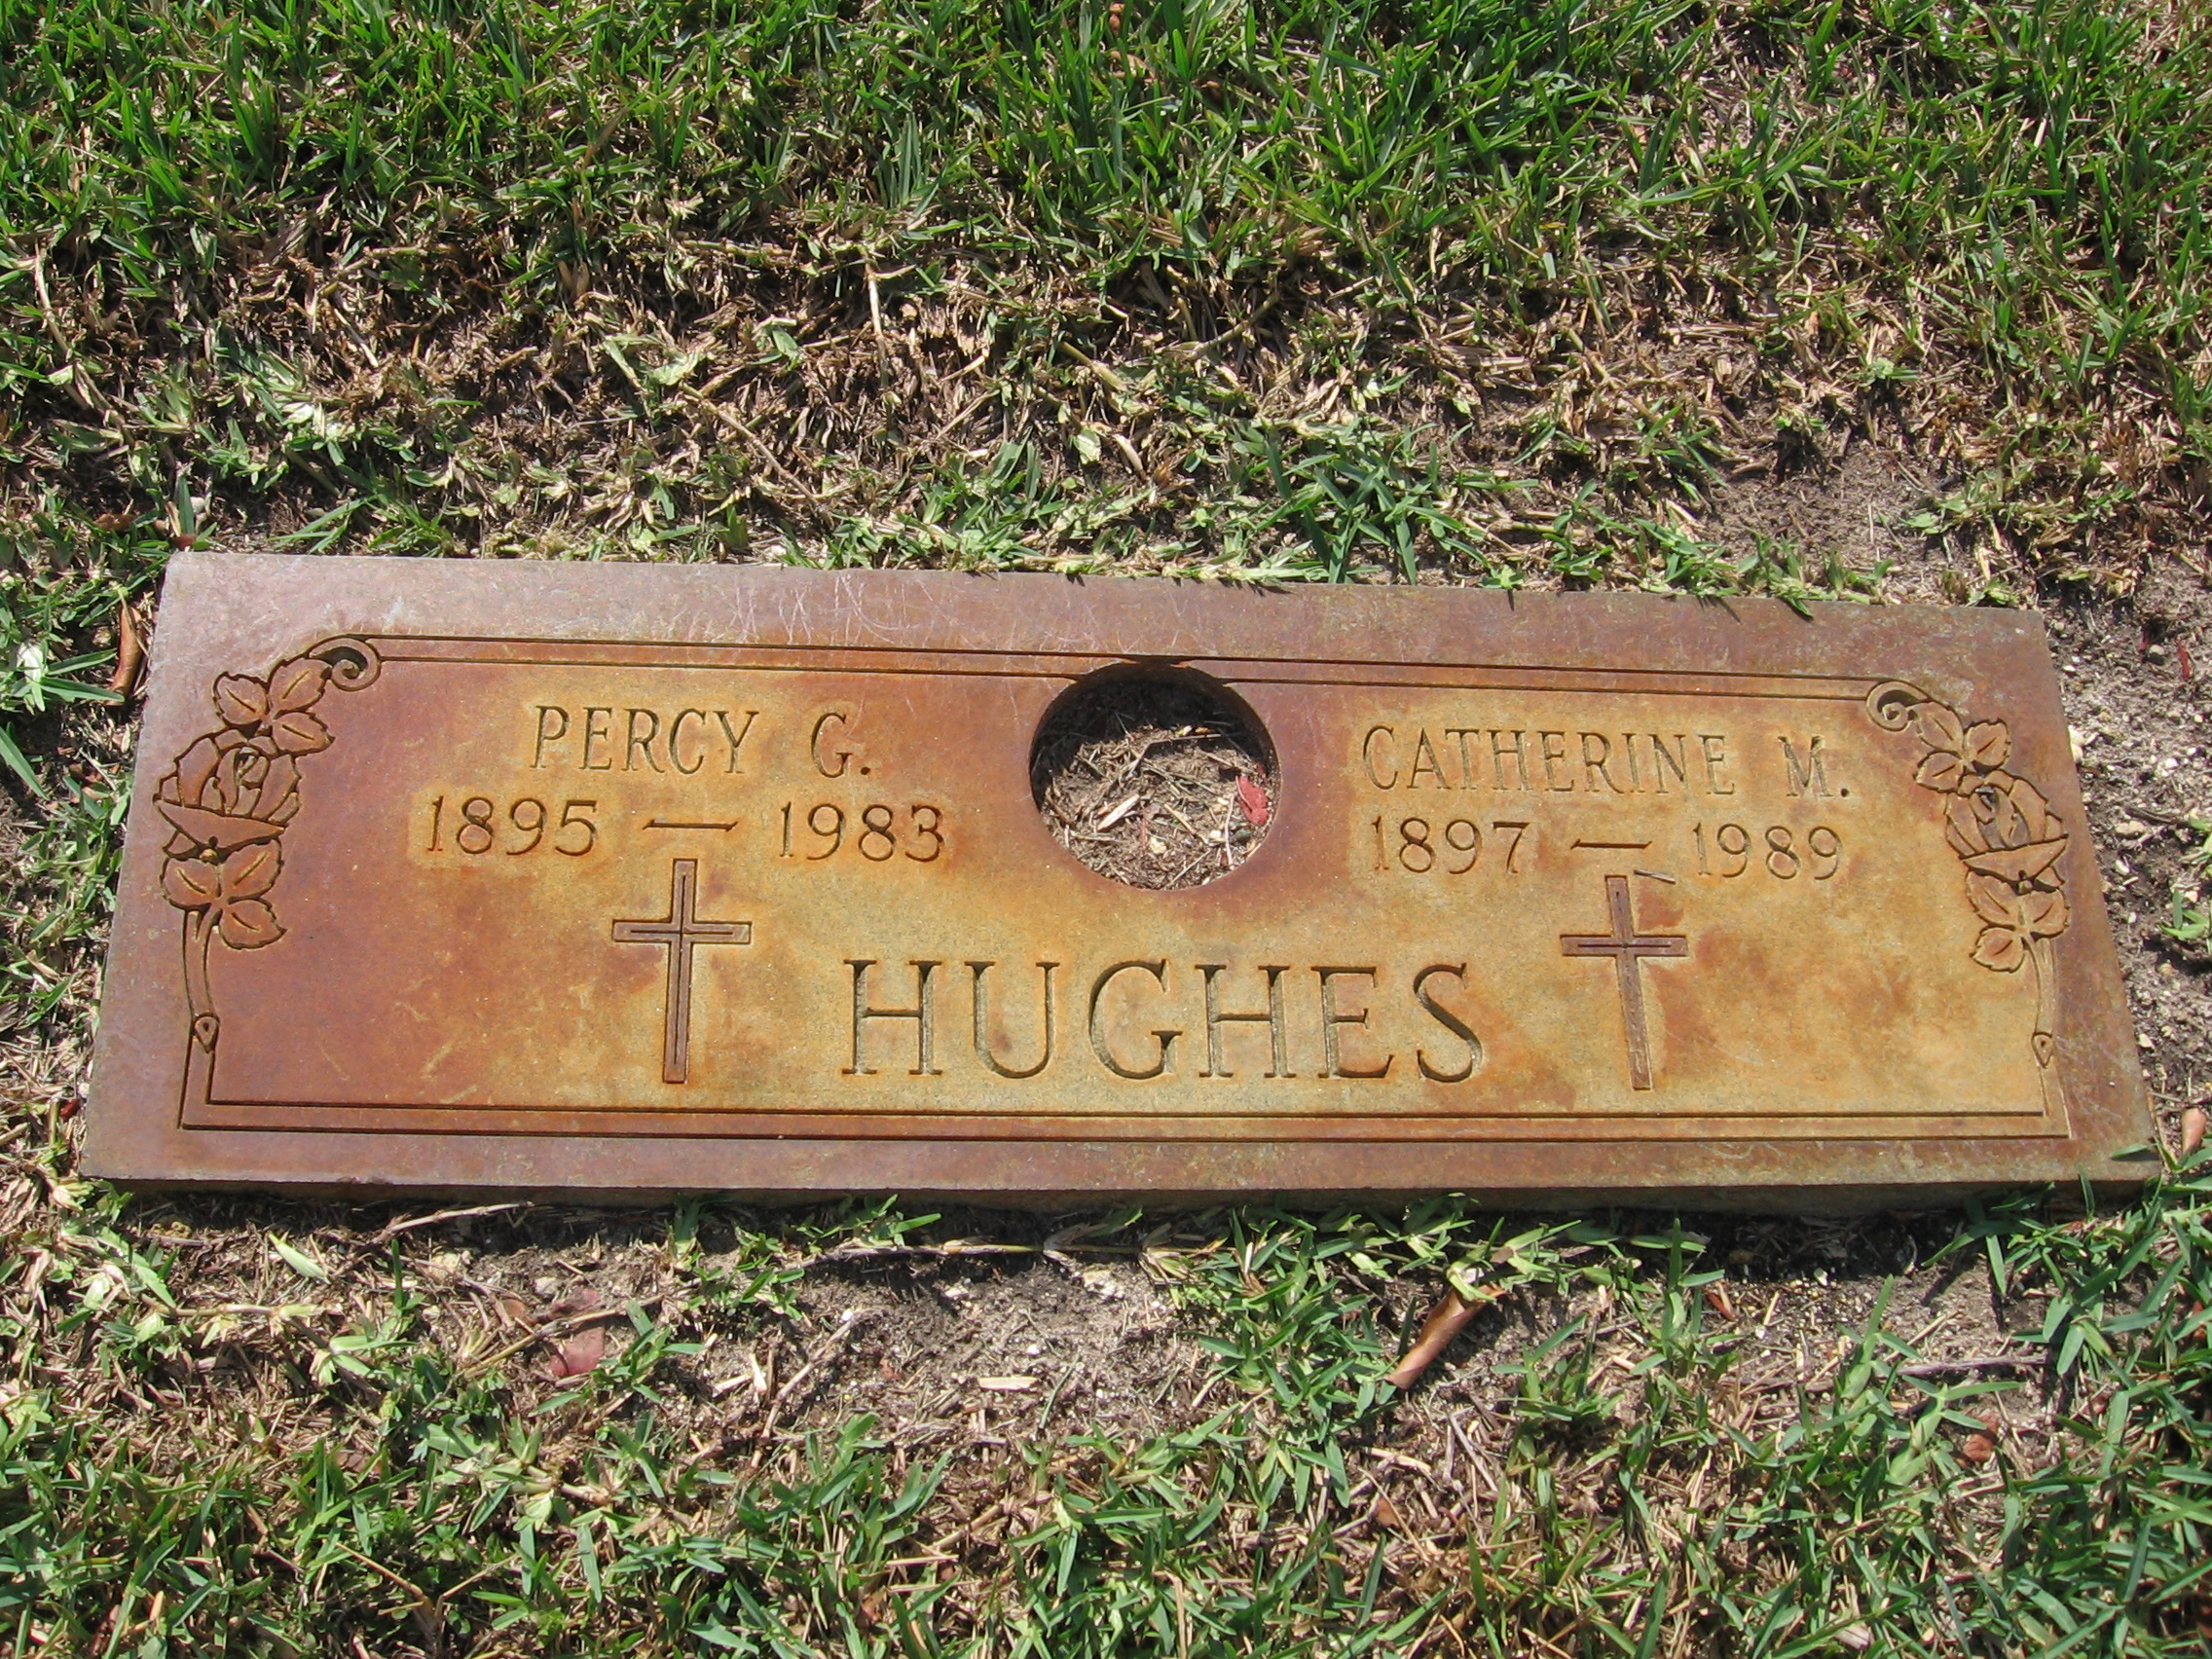 Percy G Hughes